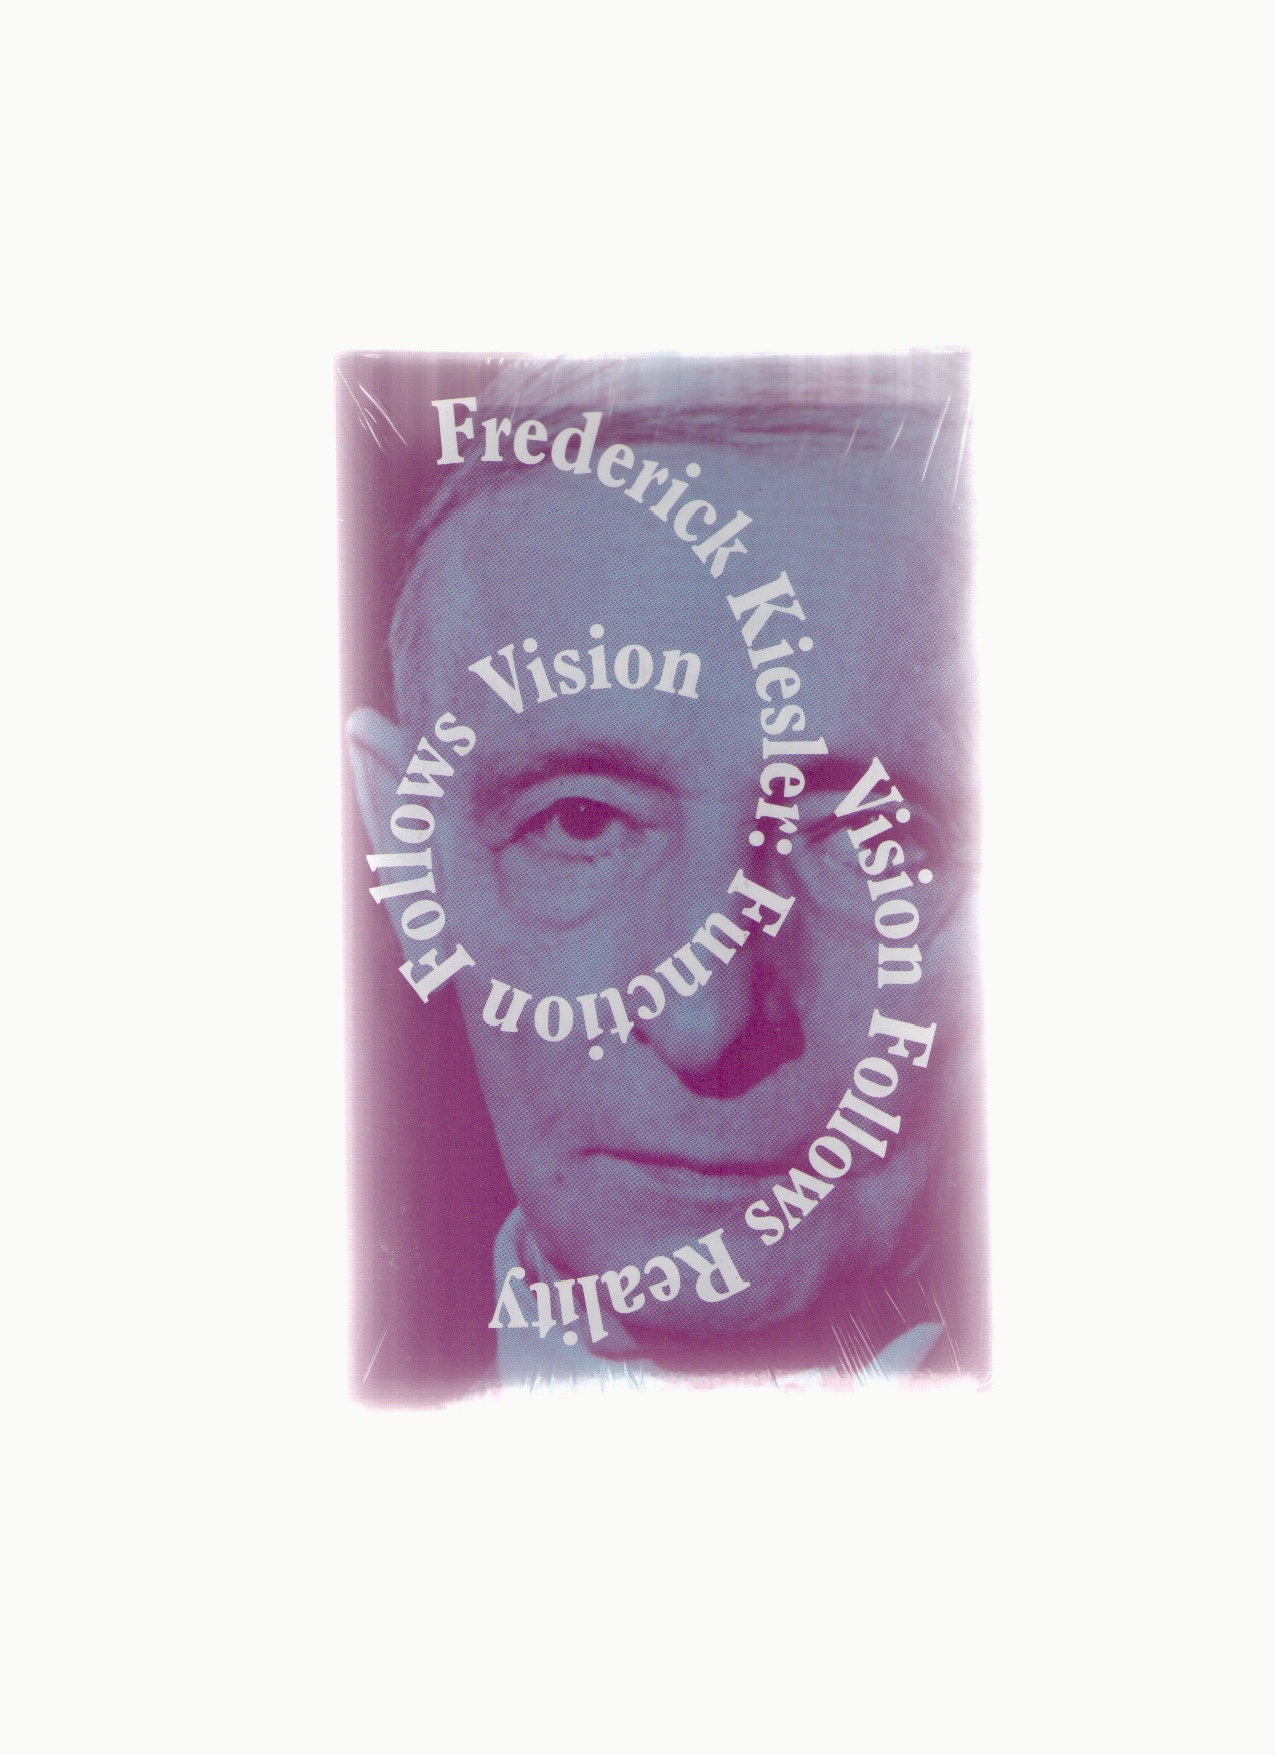 KIESLER, Frederick - Function Follows Vision, Vision Follows Reality